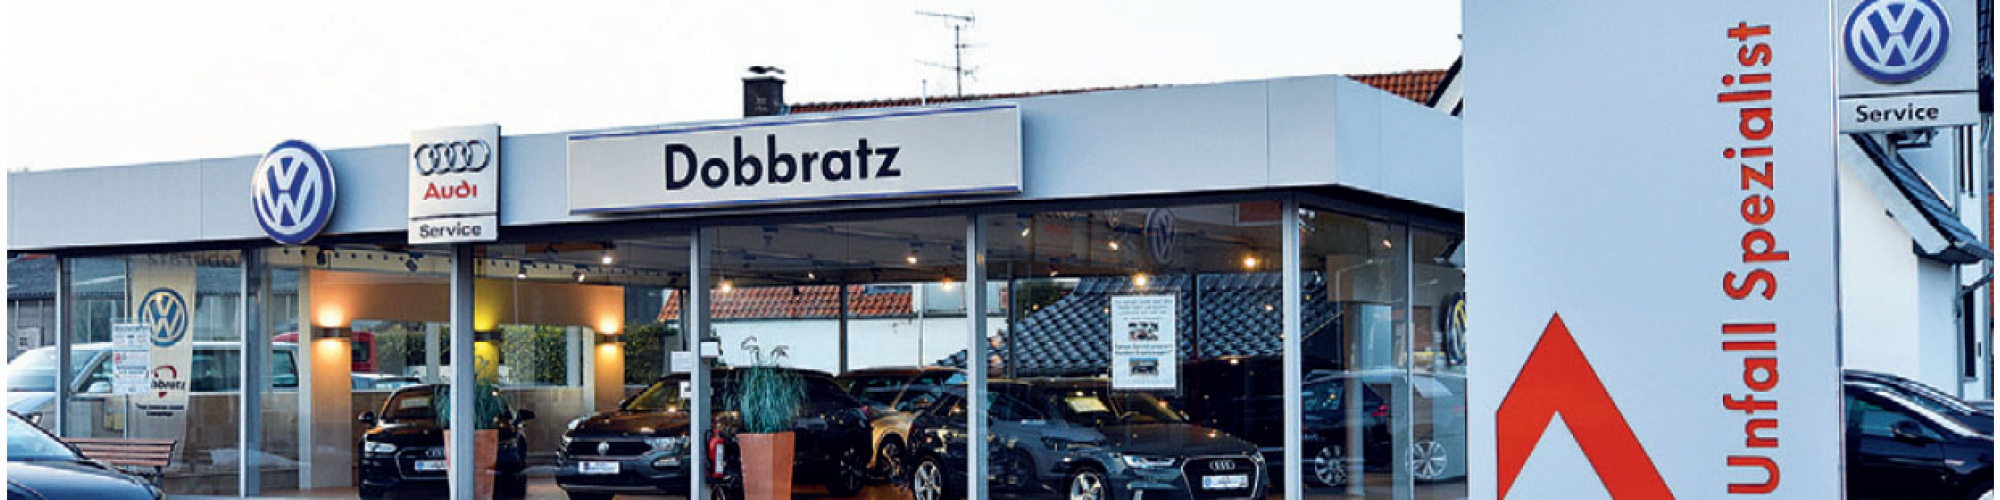 Paul Dobbratz GmbH